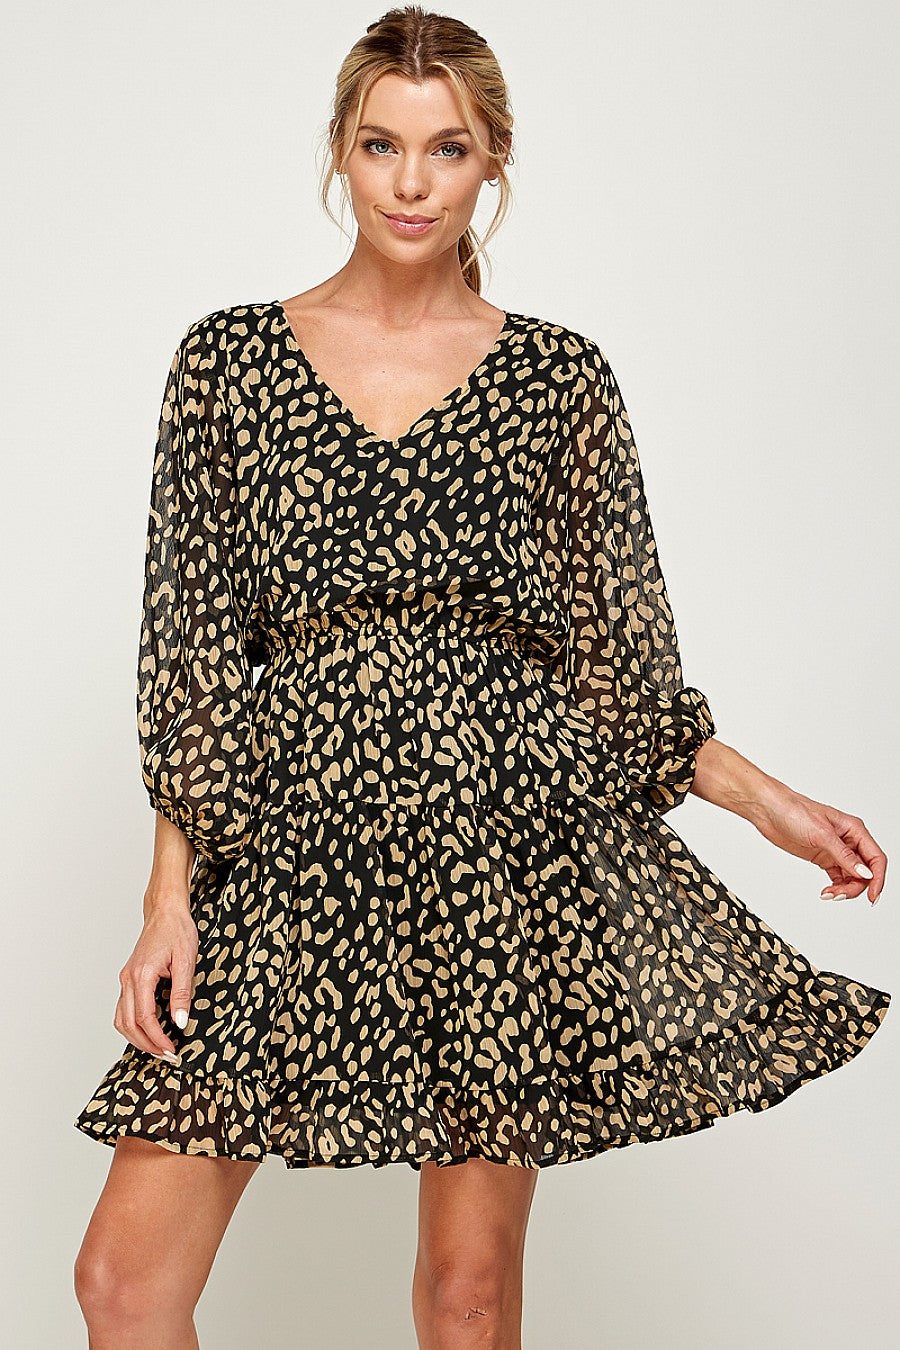 Cocktail Dresses Short Leopard Print Ruffled Dress Black